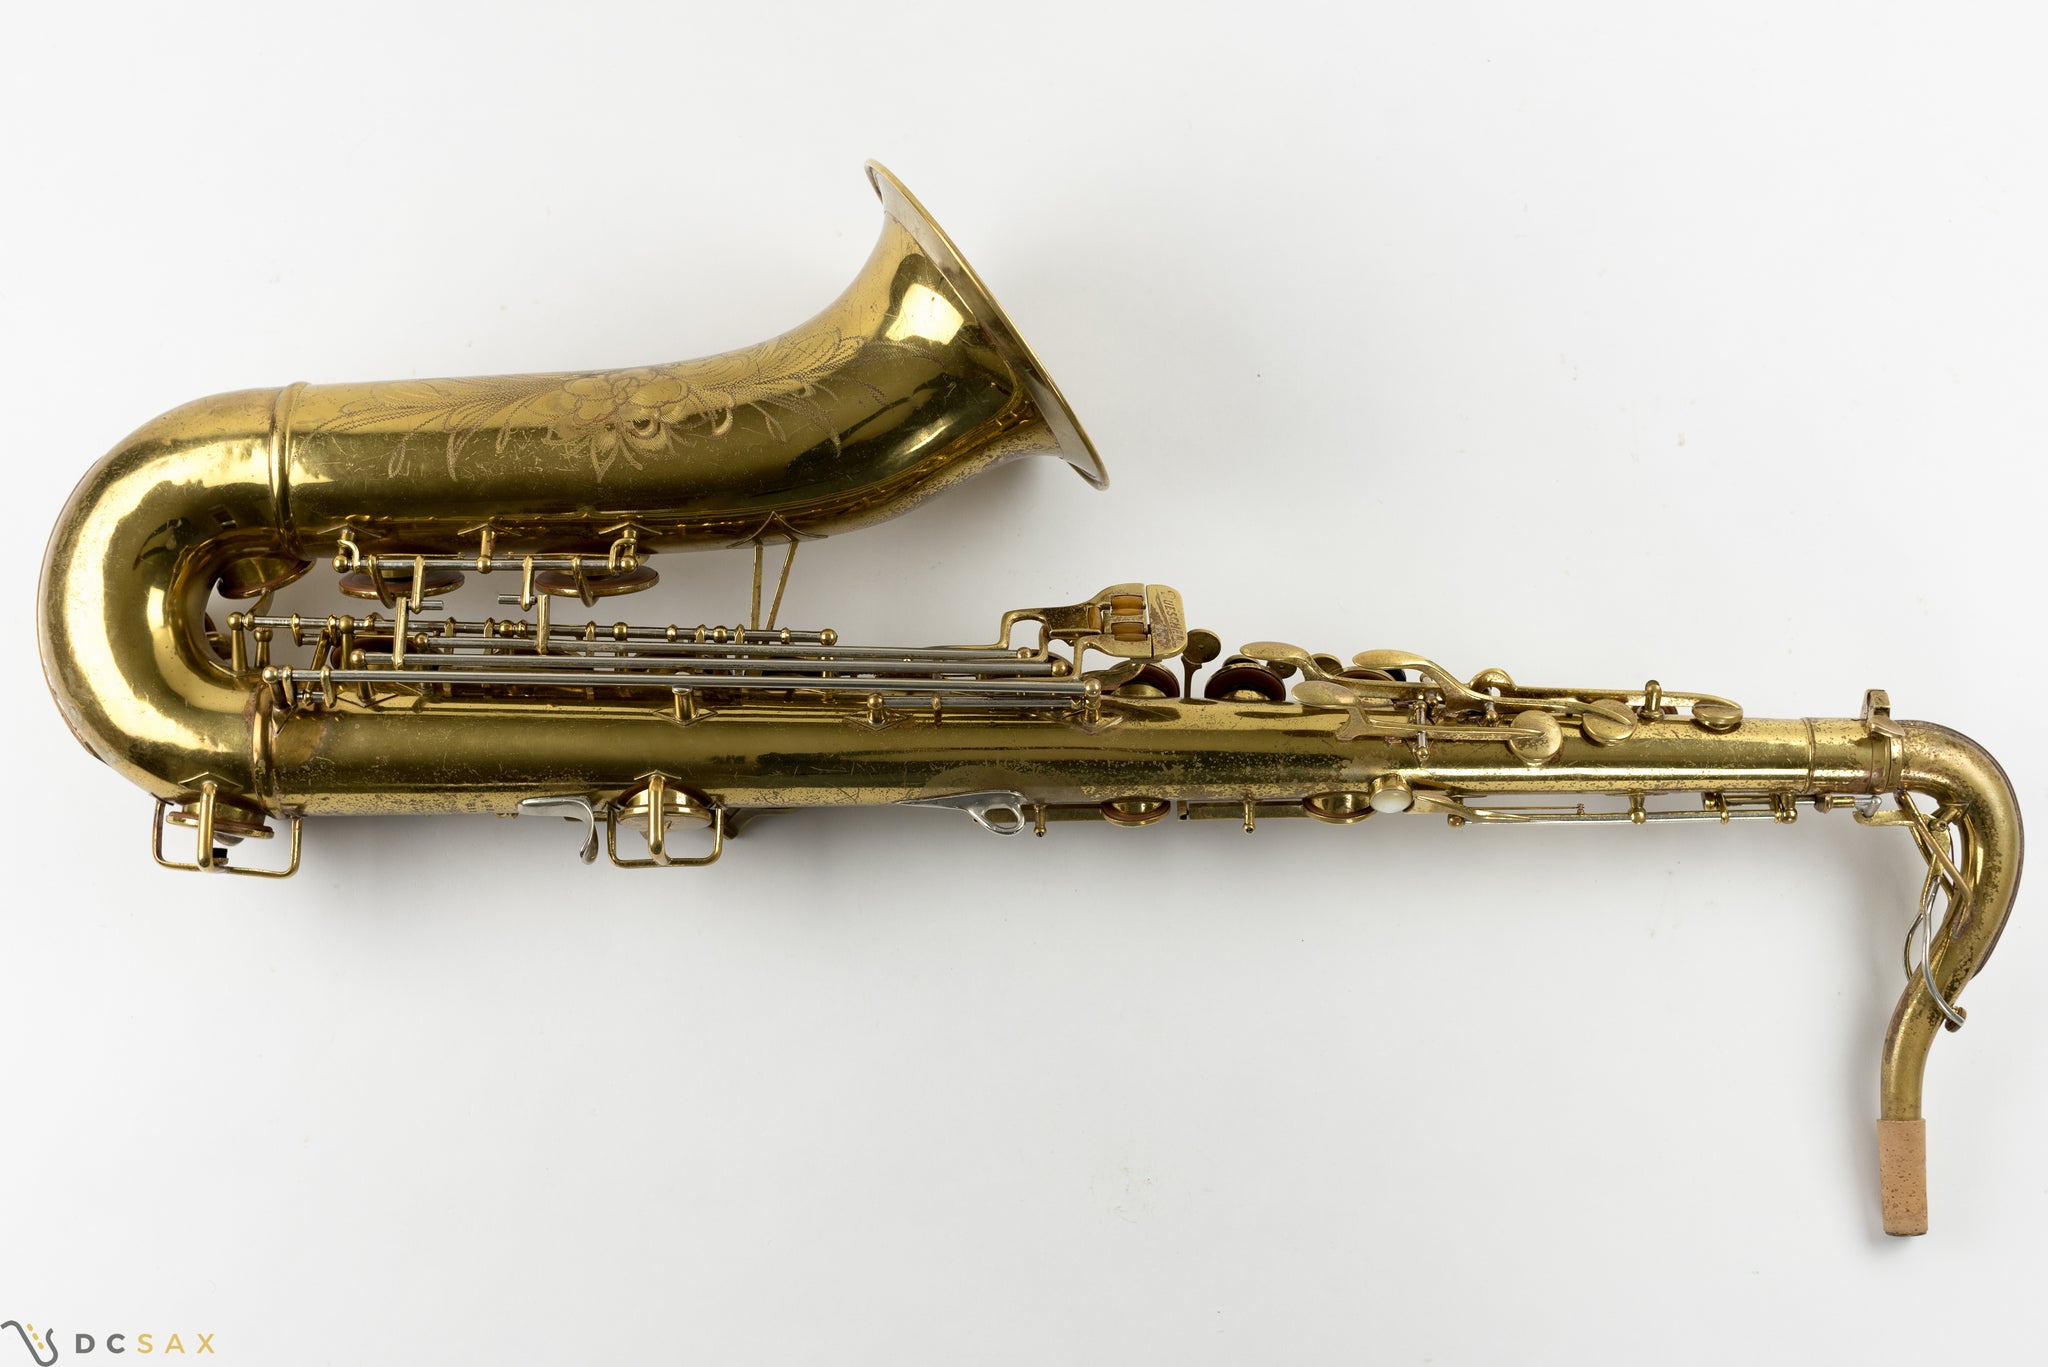 1949 Buescher 400 Top Hat and Cane Tenor Saxophone, Fresh Overhaul, Original Lacquer, Video